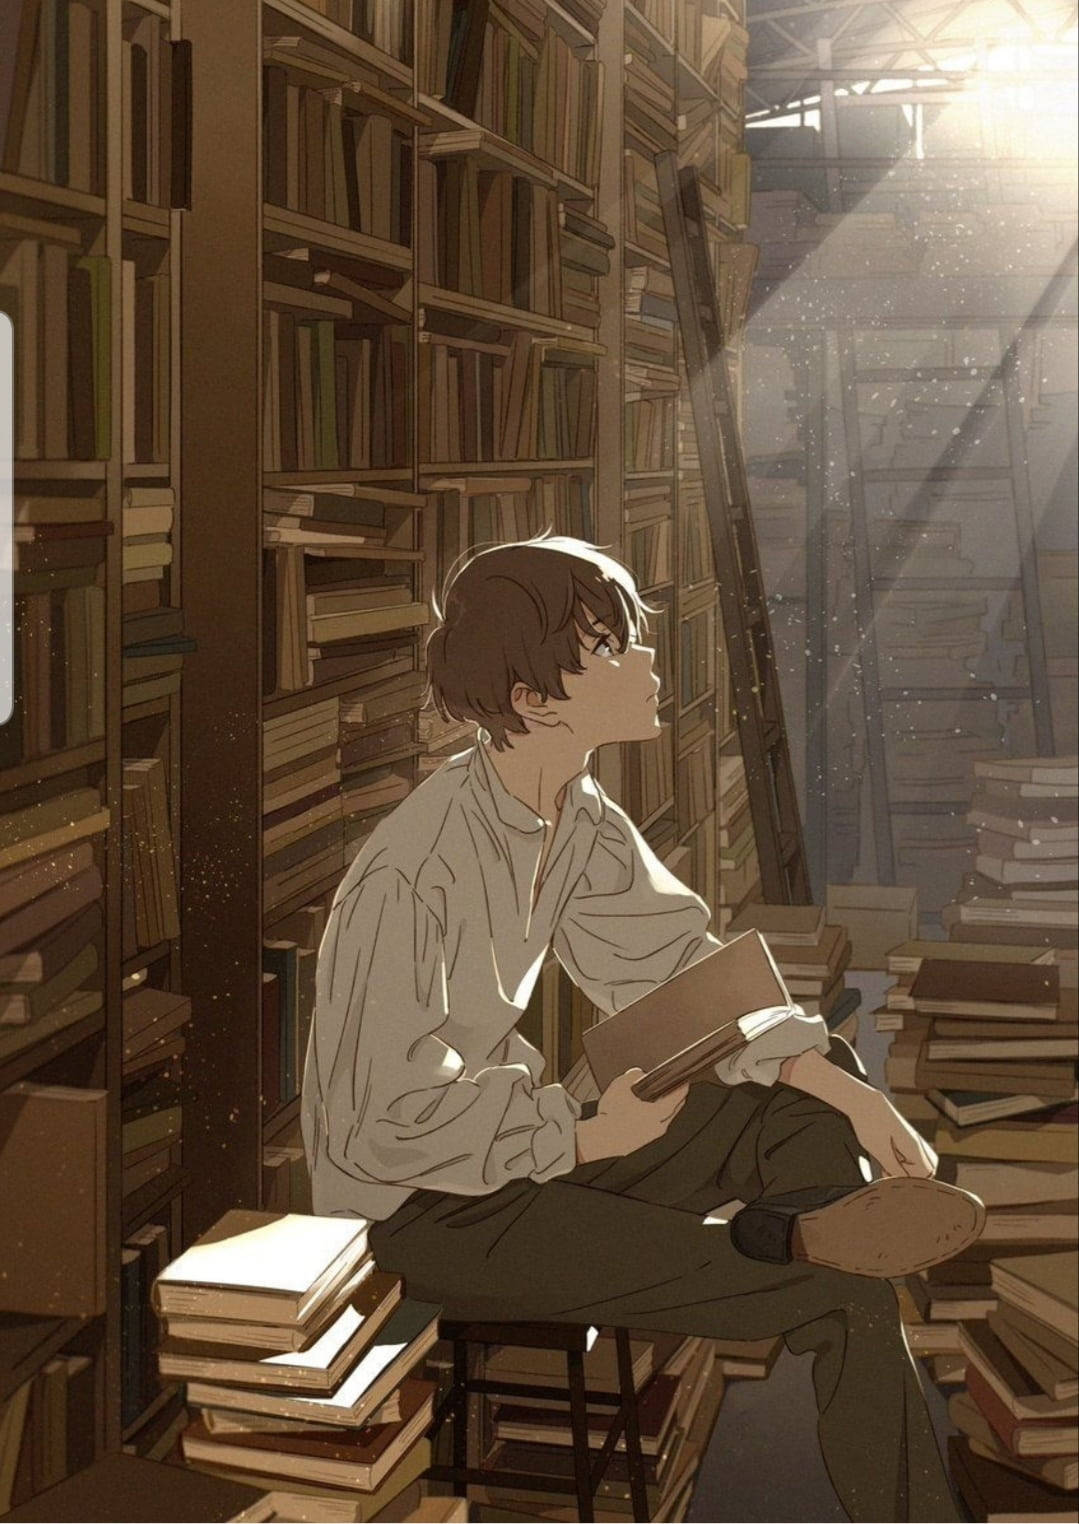 Anime Boy On A Dump Of Books Background